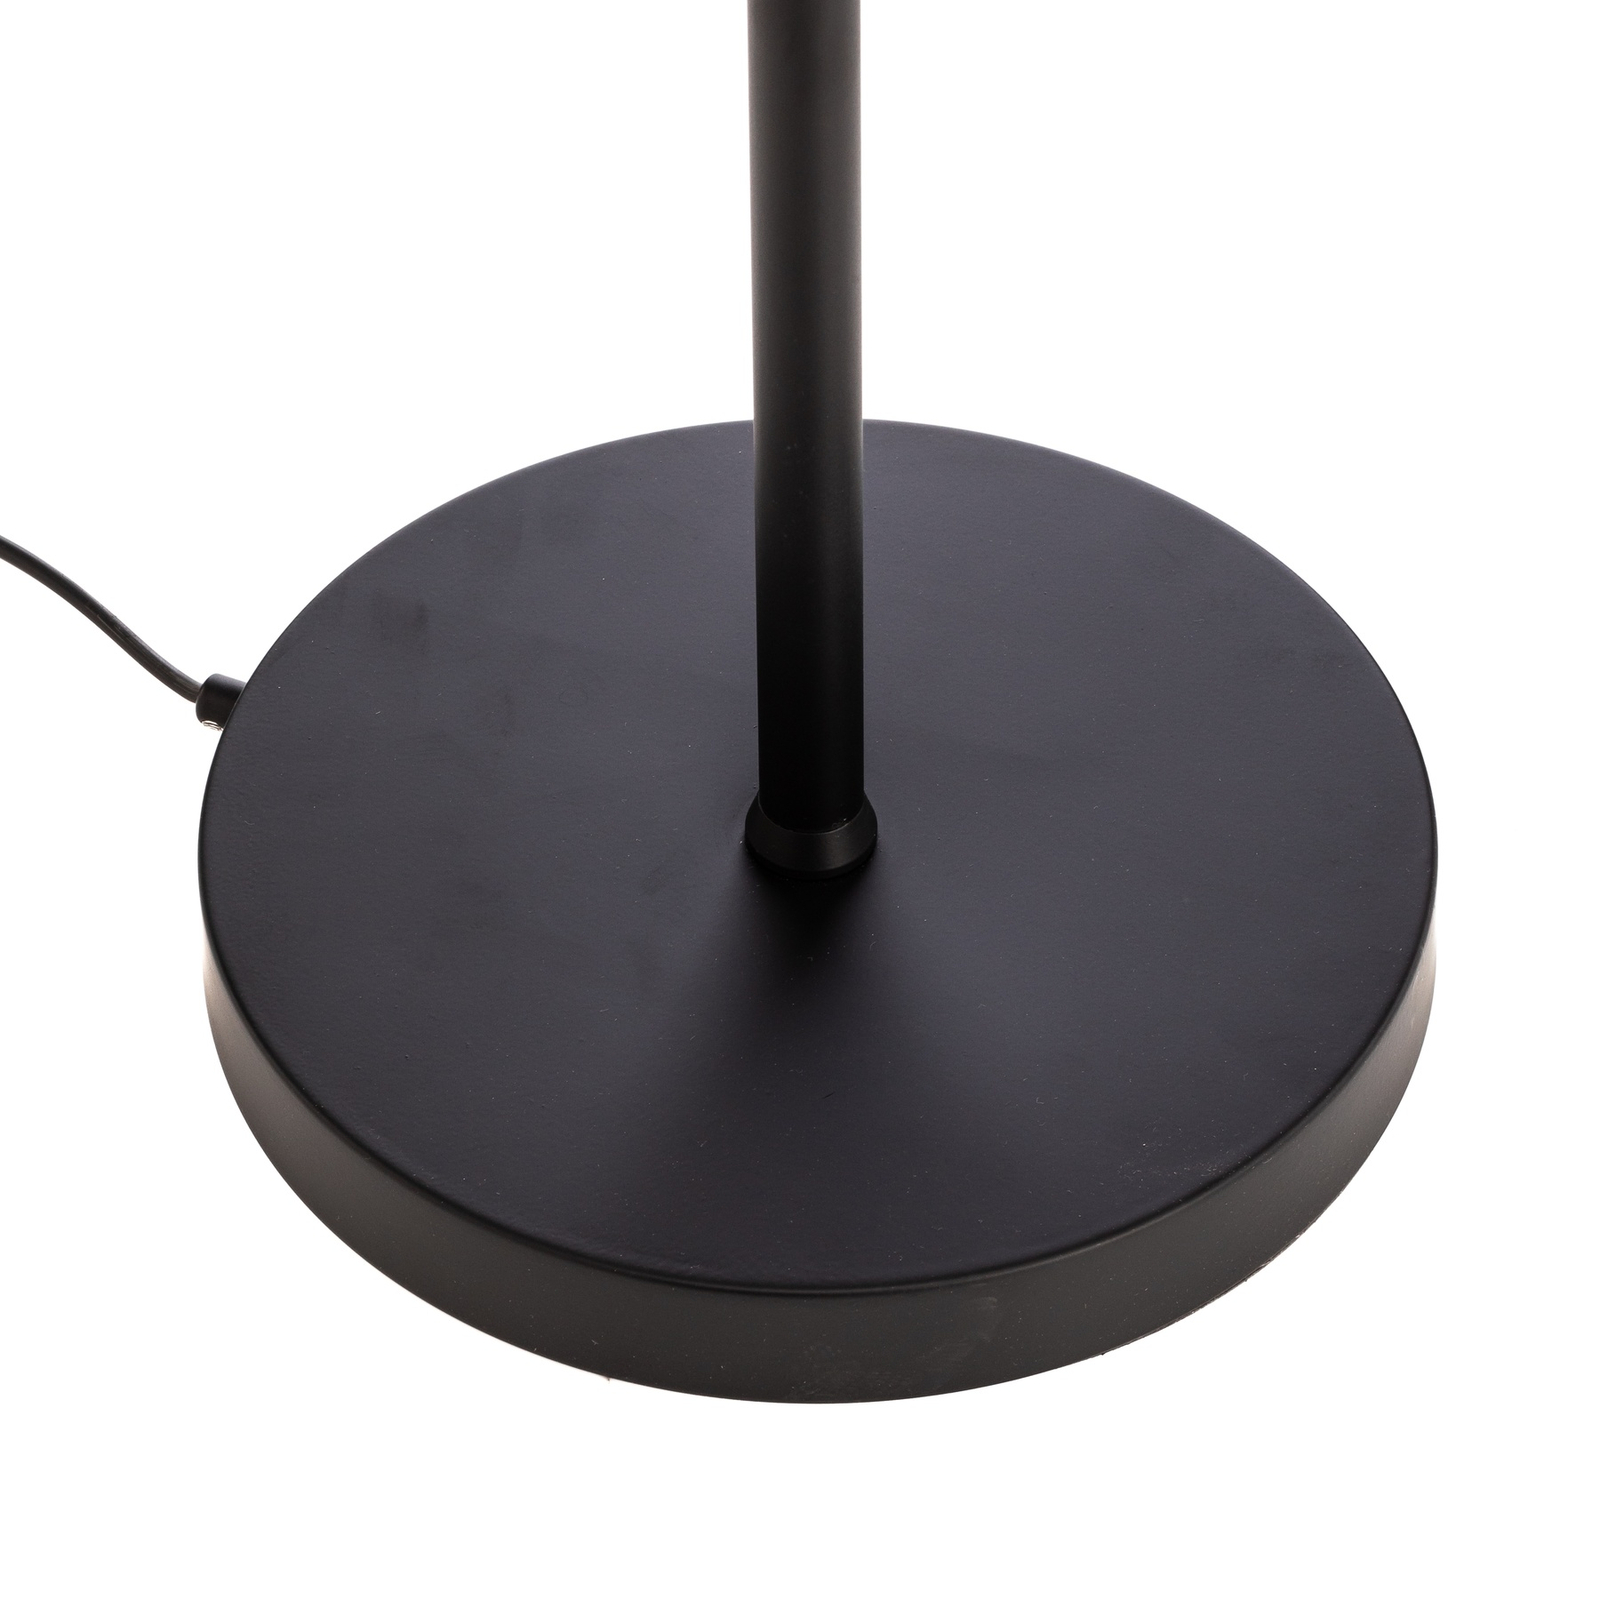 Floor lamp LM-9113-2BSY, black, metal, 180 cm high, E14